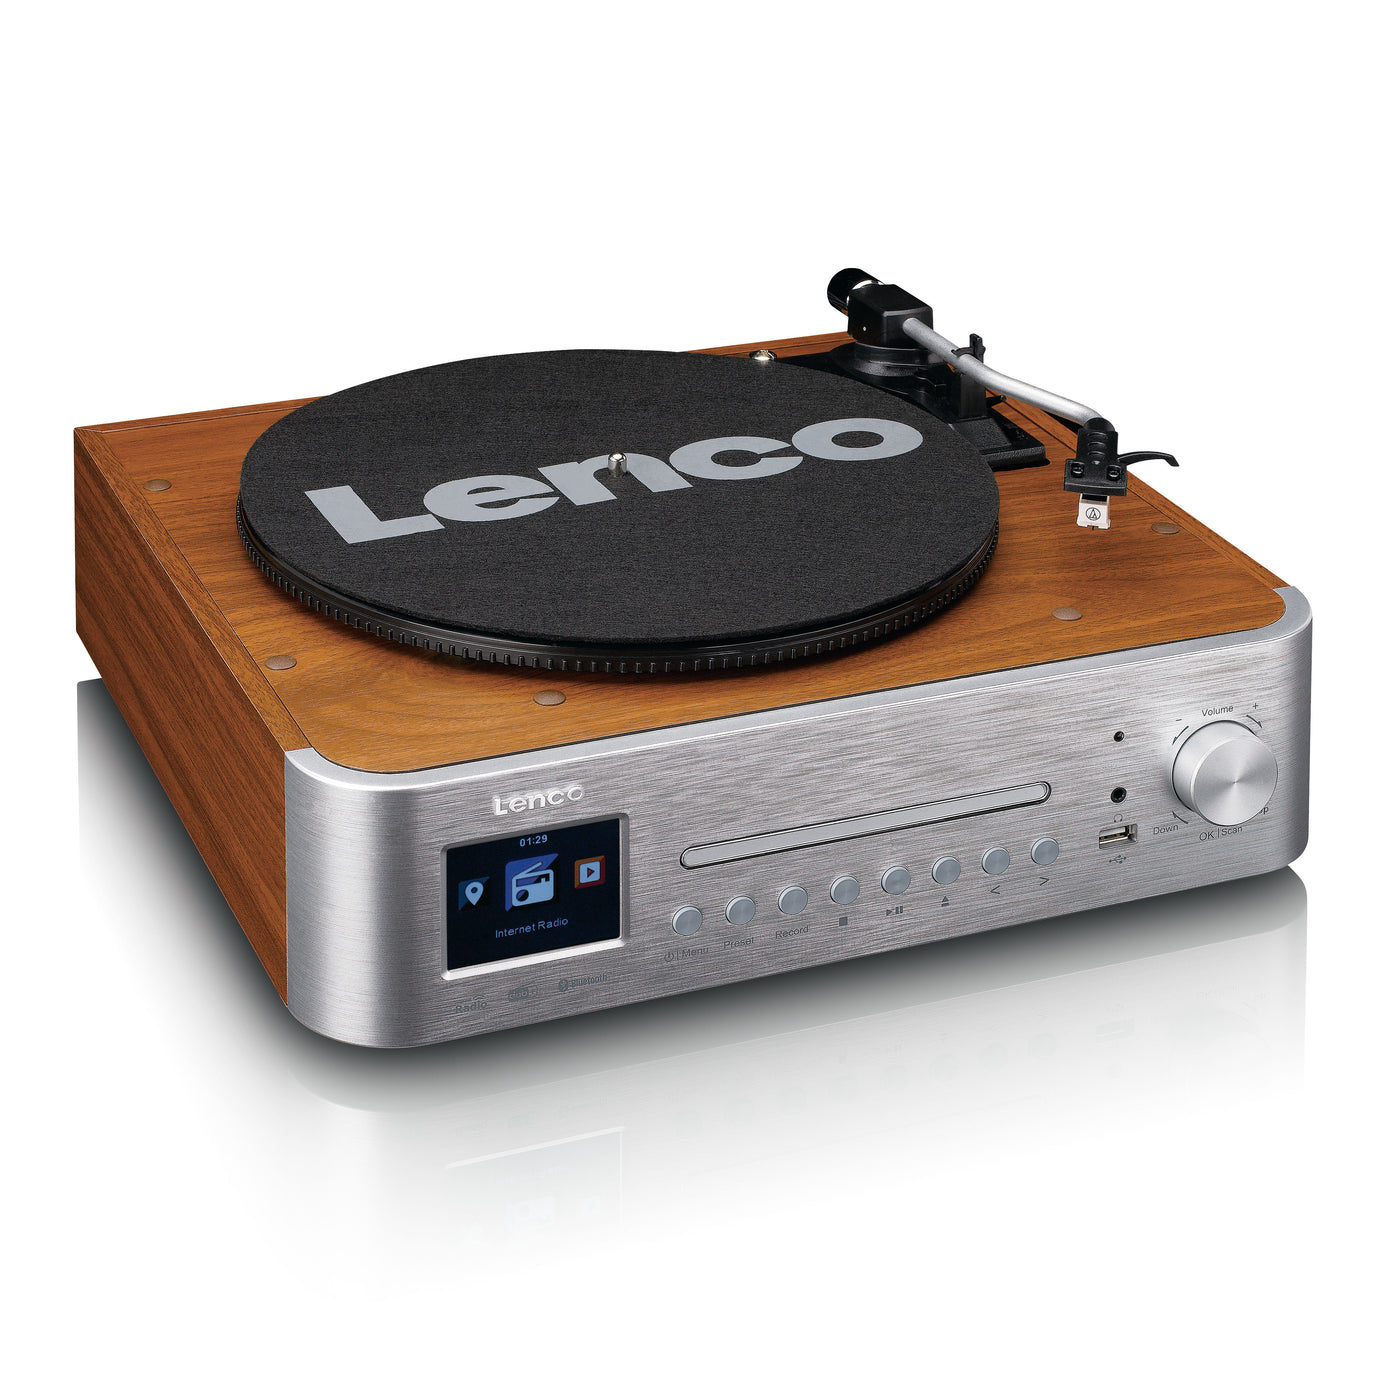 LENCO MC-660WDSI - Hifi set met internet, DAB+ en FM radio, Bluetooth®, CD/MP3-speler en platenspeler met twee externe houten luidsprekers - Zilver/Hout